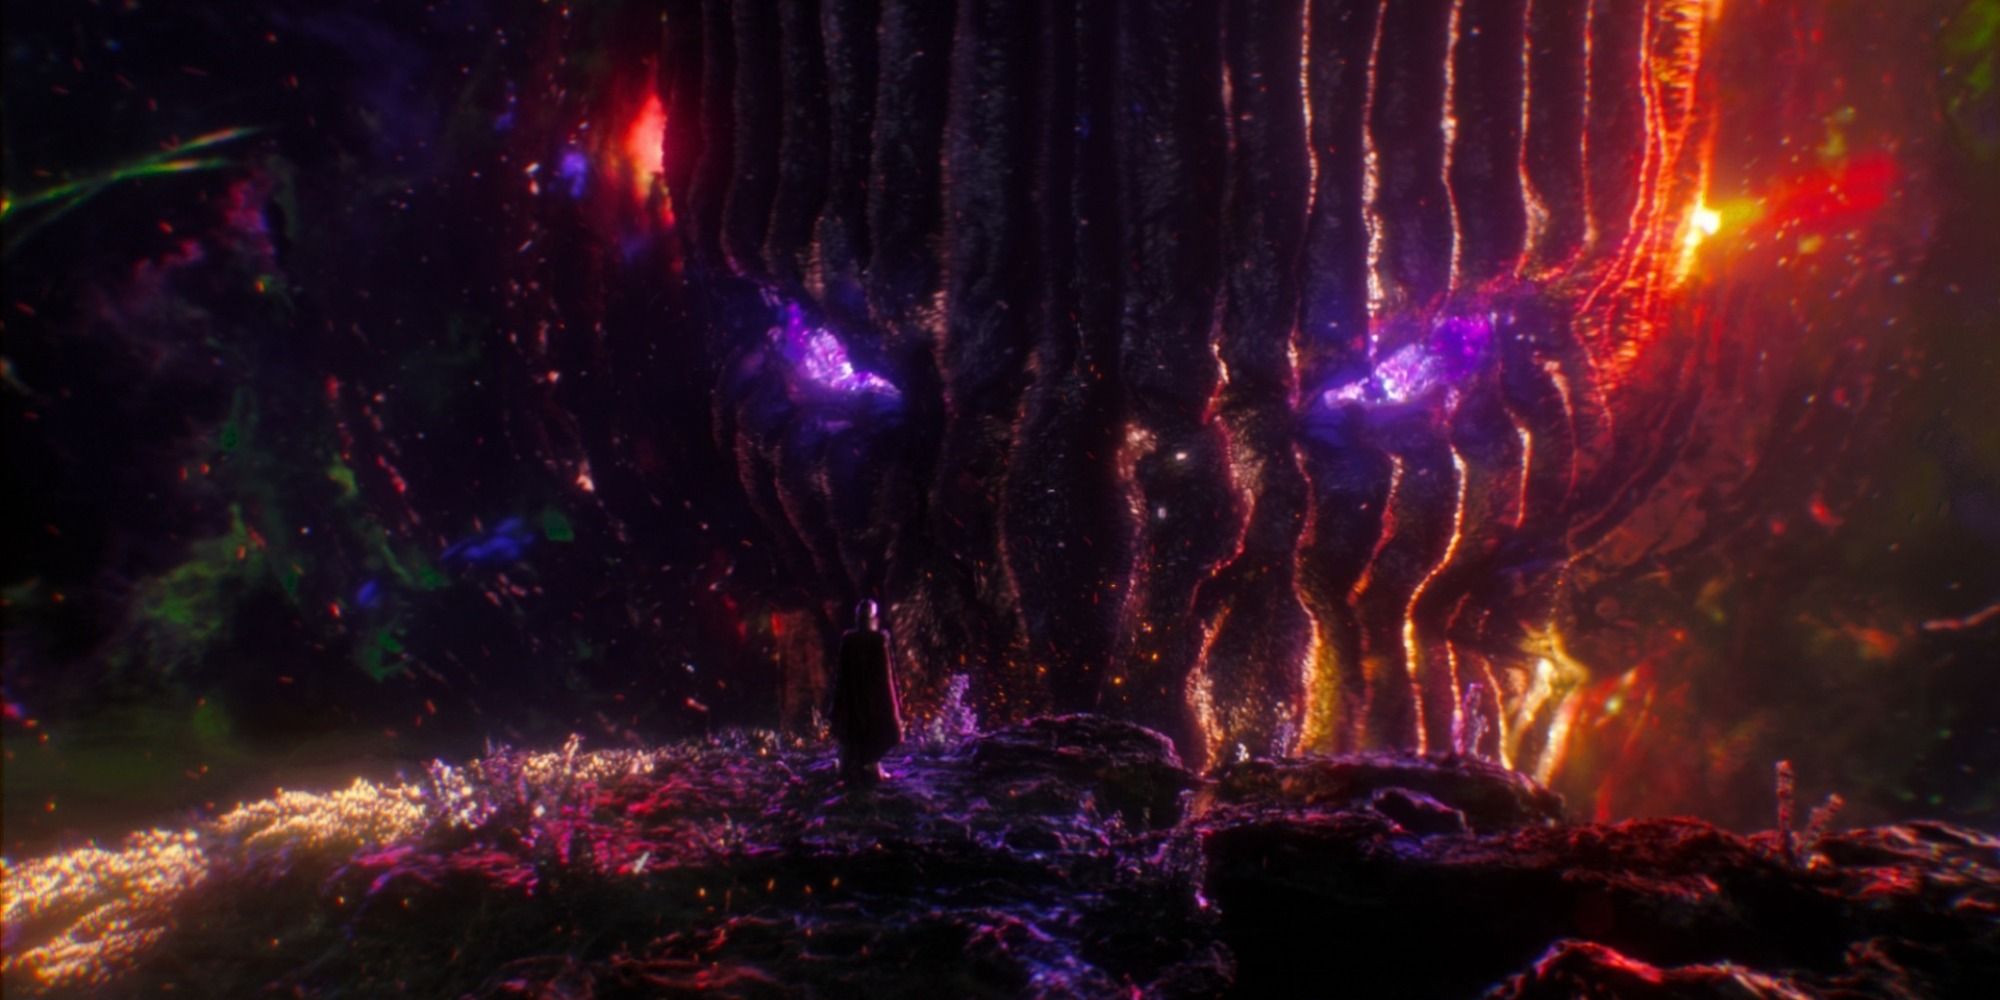 Doctor Strange confronting Dormammu in the Dark Dimension wide shot